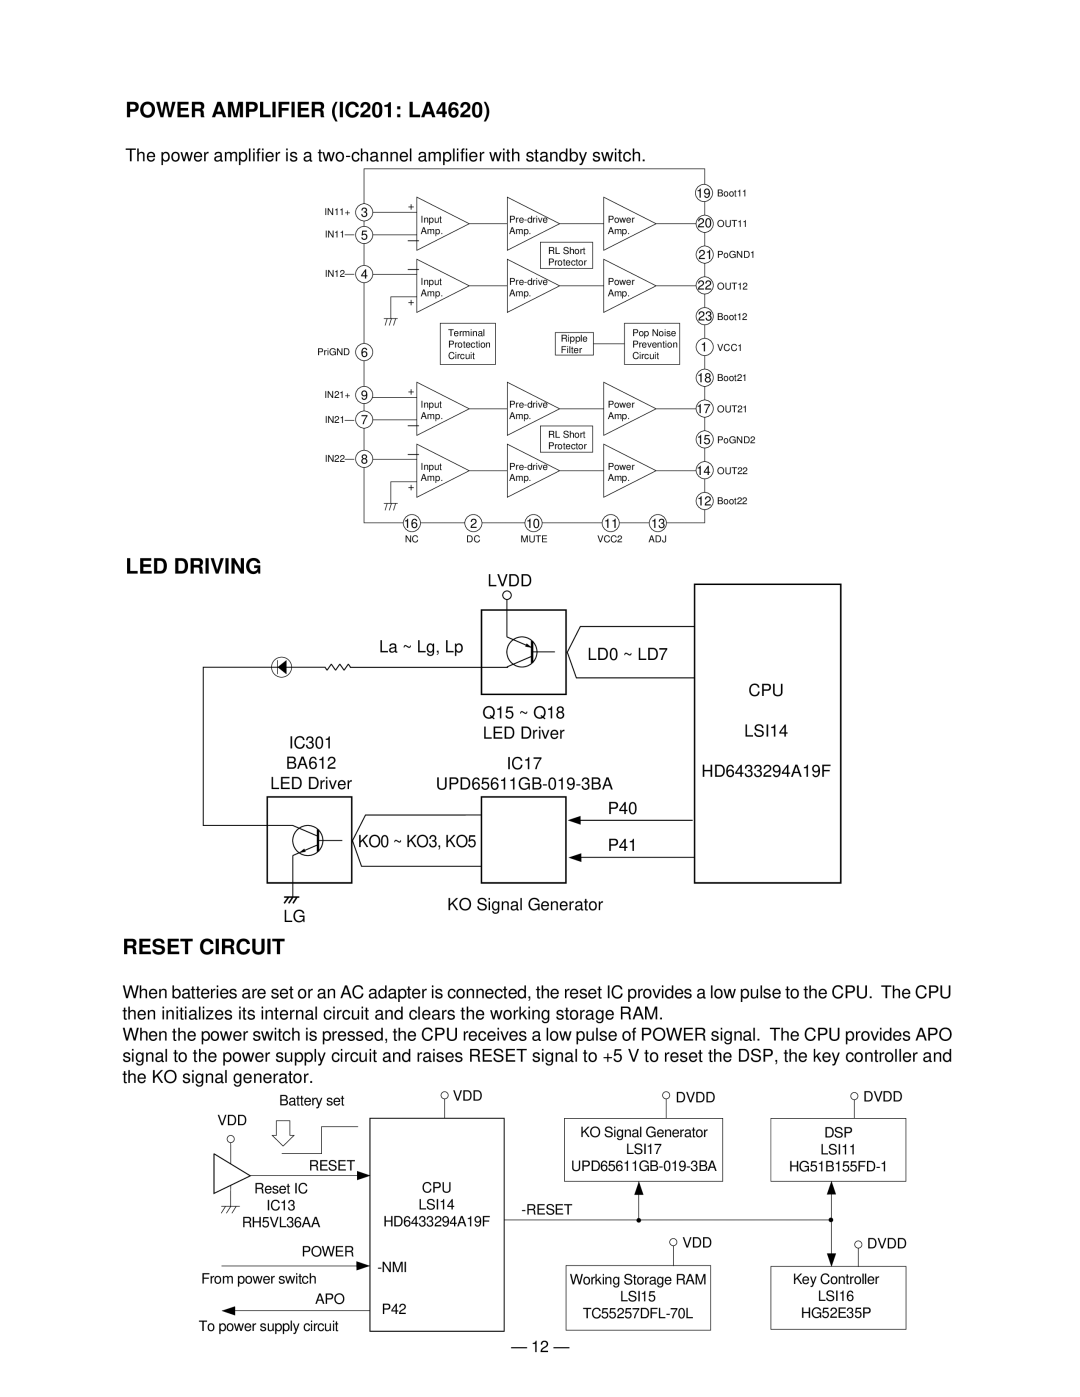 Casio WK-1500 manual Power Amplifier IC201 LA4620, LED Driving, Reset Circuit, Cpu, LSI14 